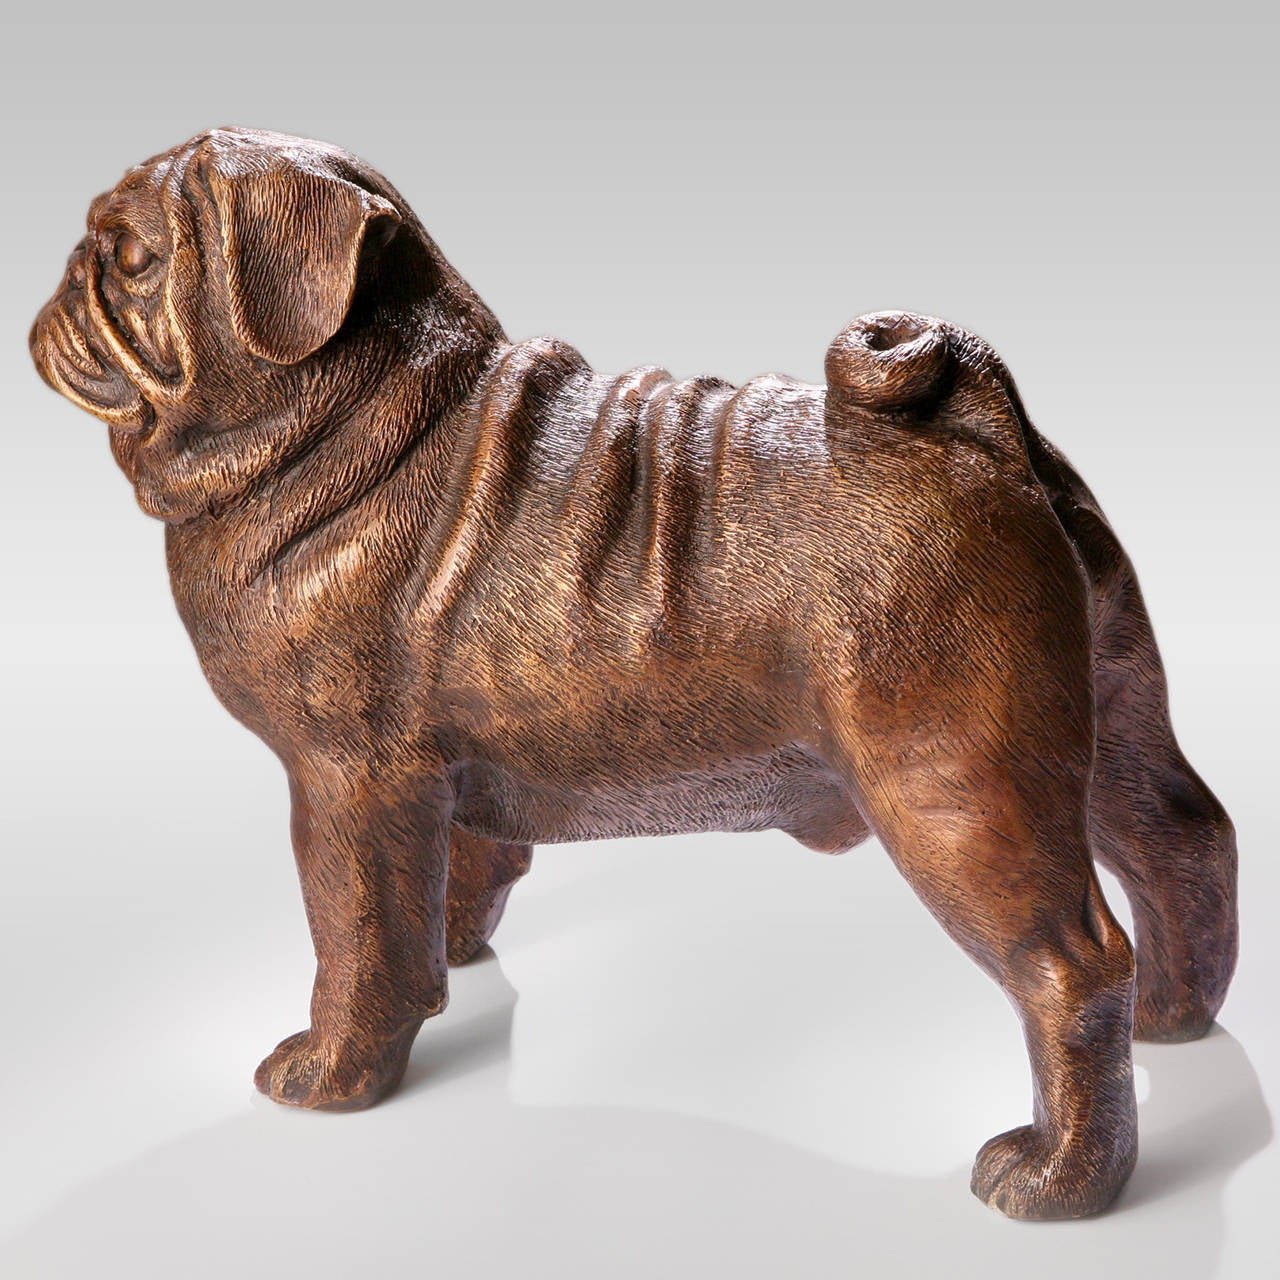 Small standing cast bronze pug dog figure. Exclusive design.